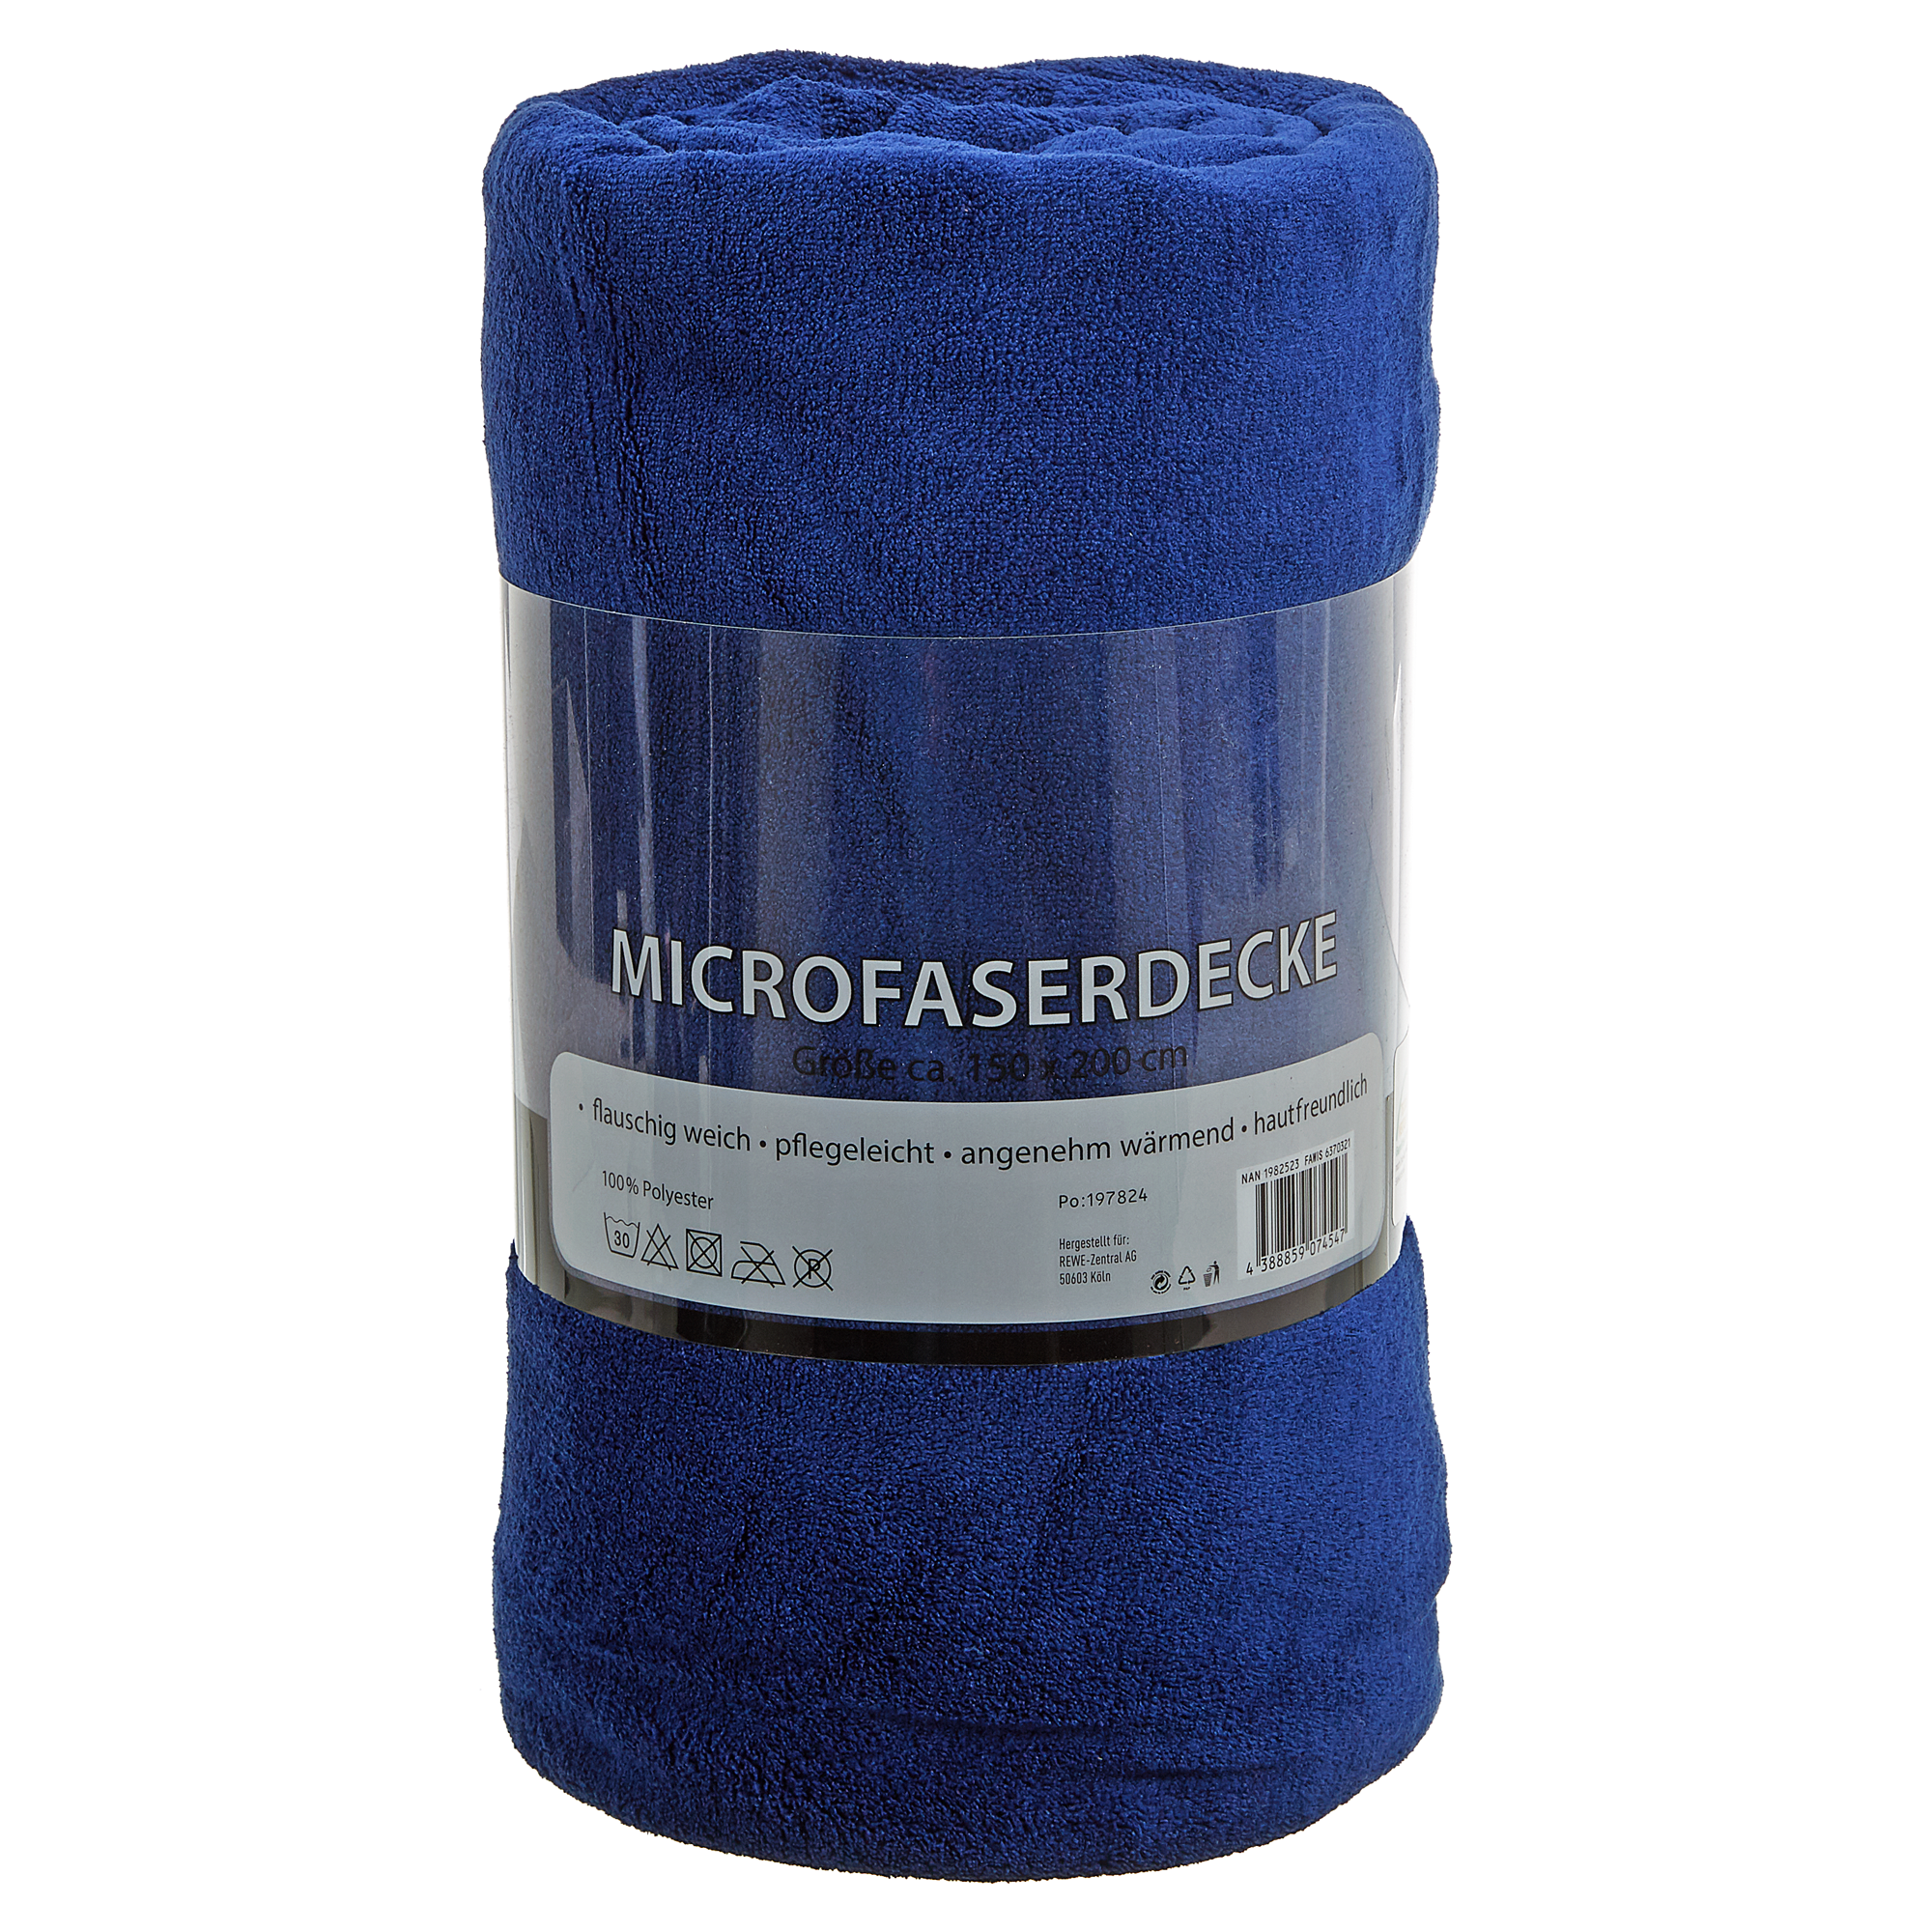 Microfaserdecke 200 x 150 cm blau + product picture